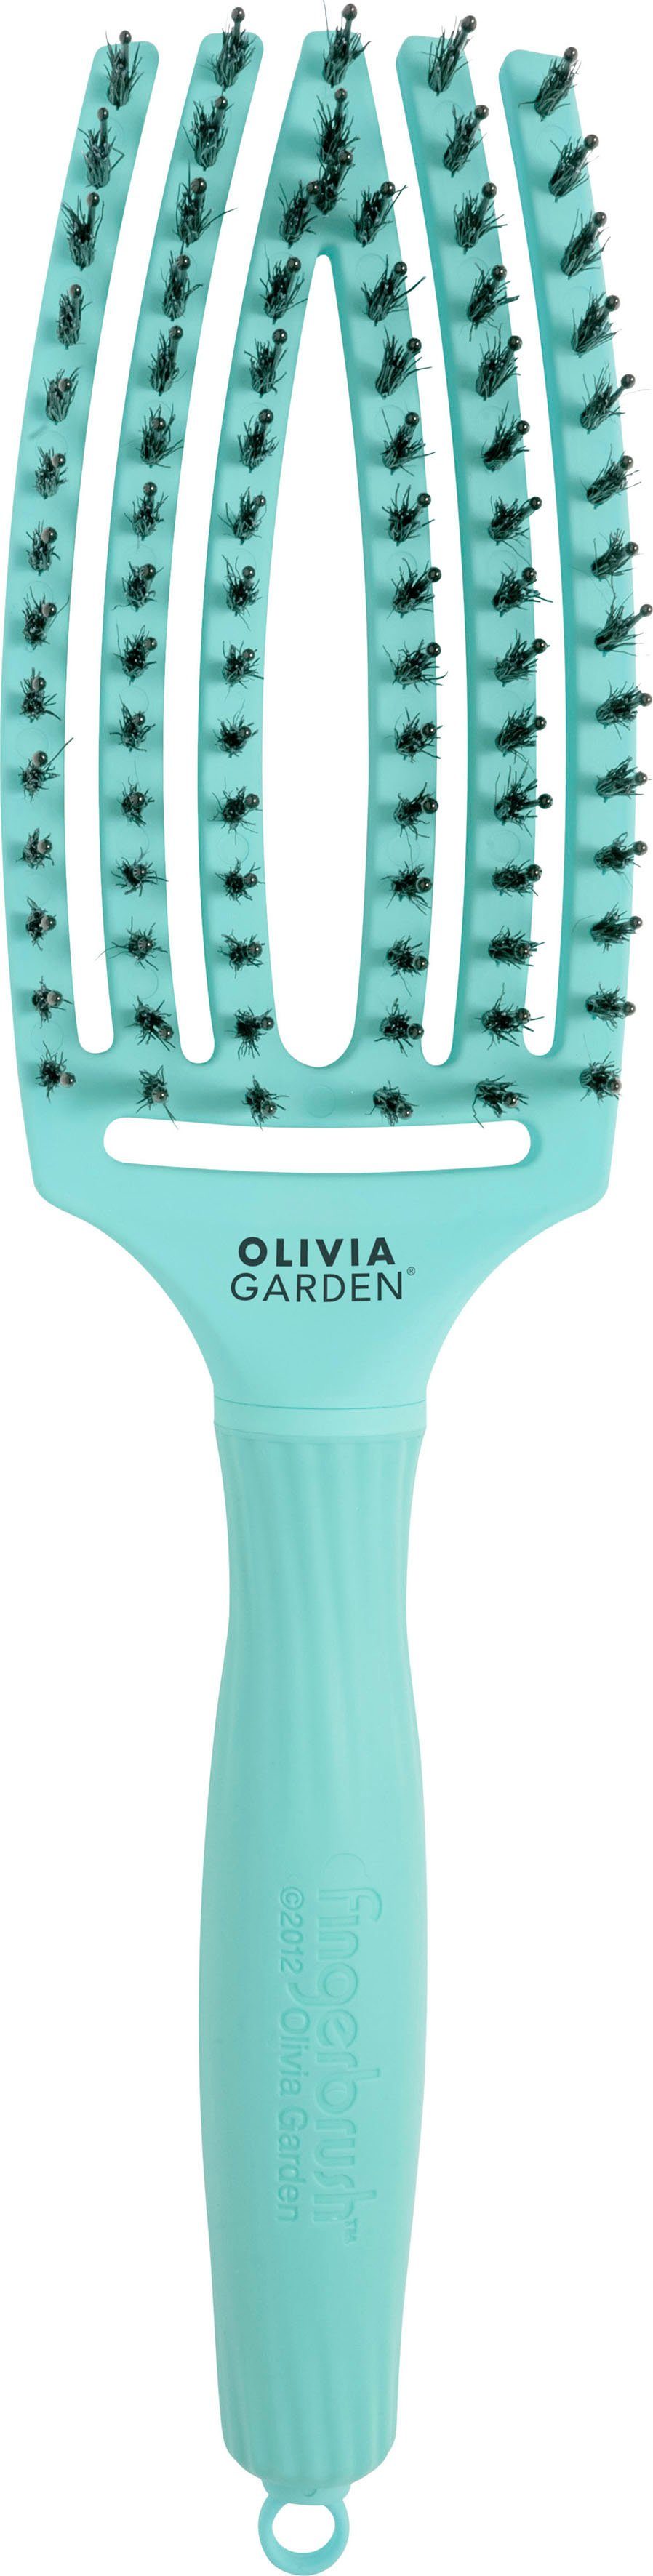 OLIVIA GARDEN Haarbürste Combo Fingerbrush Medium mint